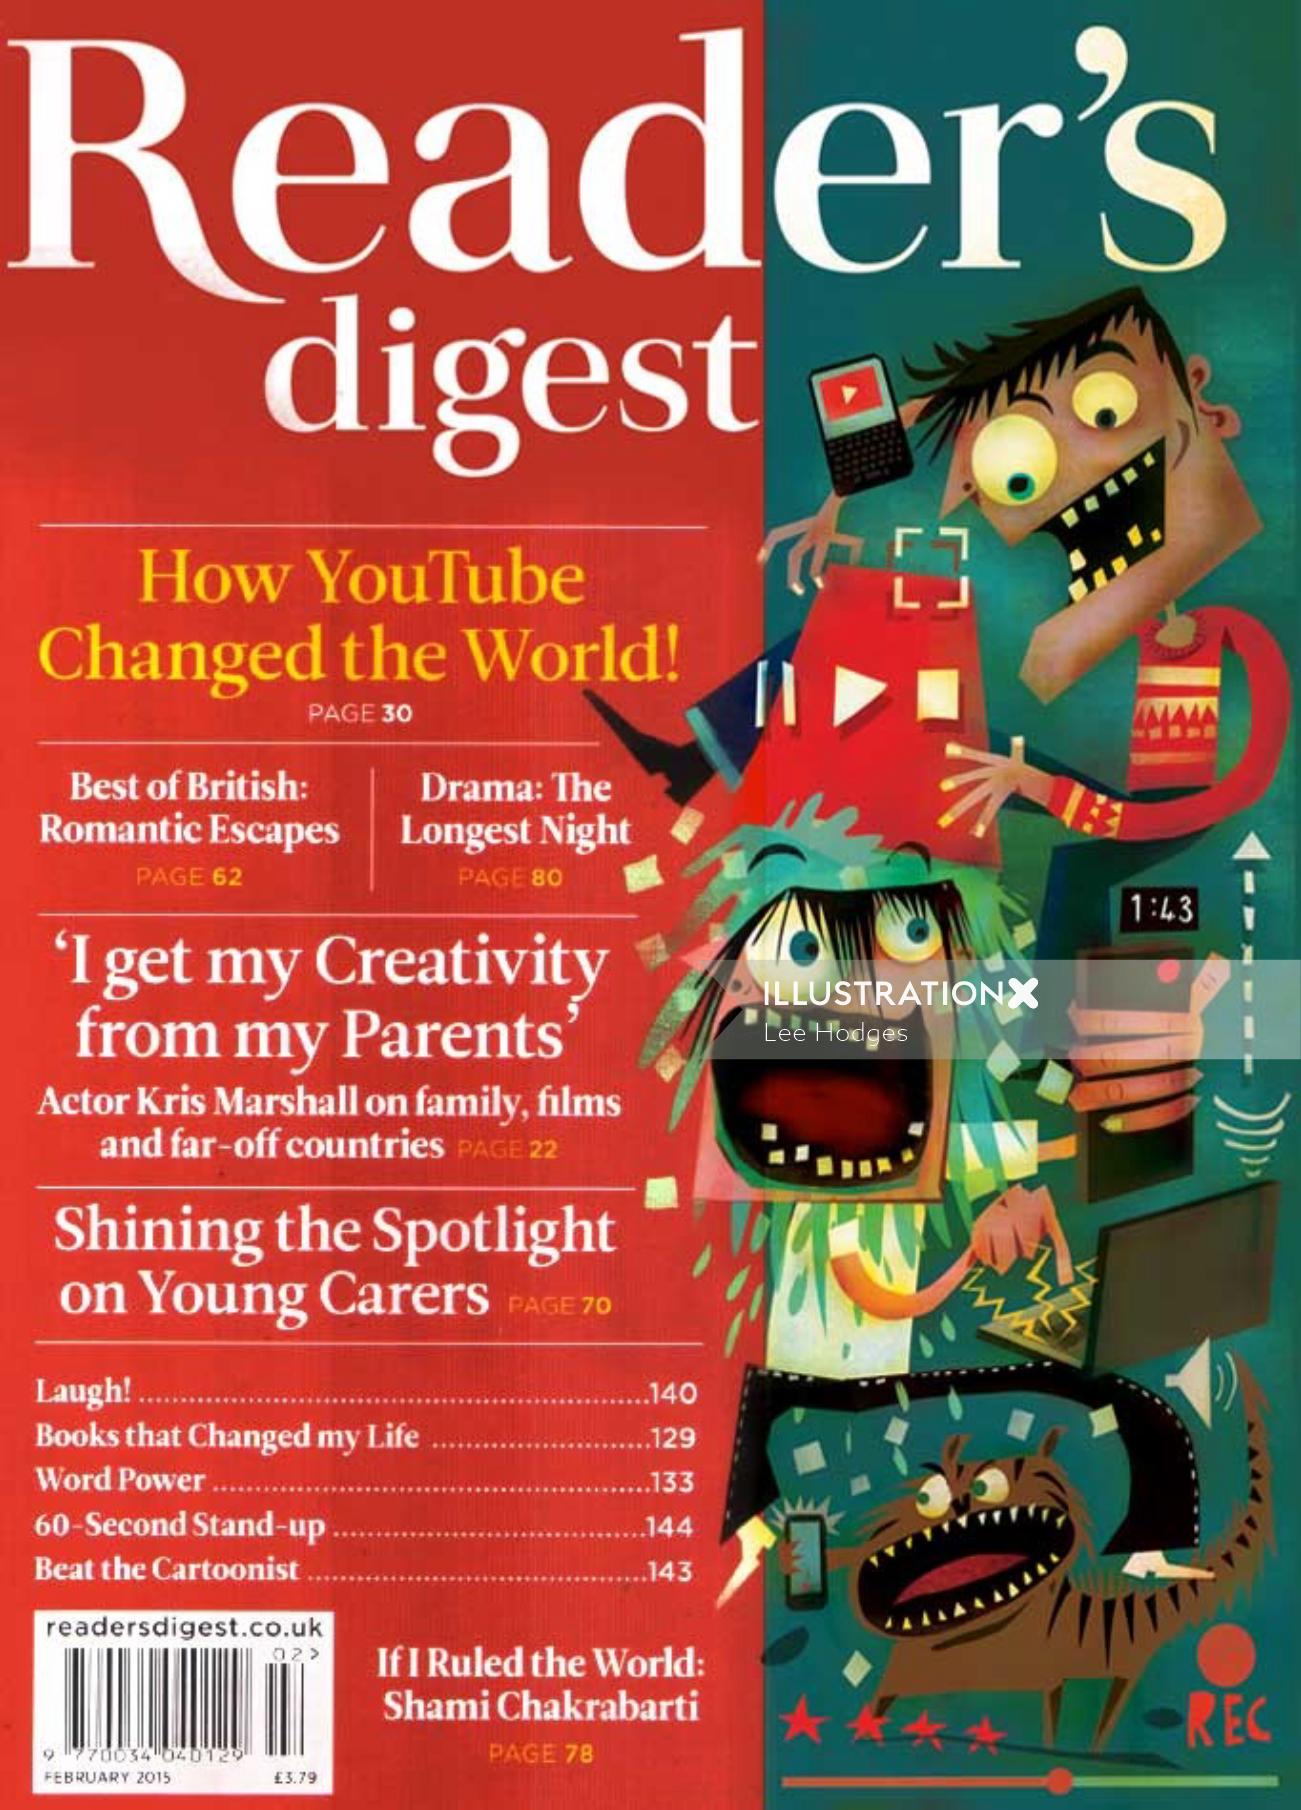 Readers Digest front cover illustration